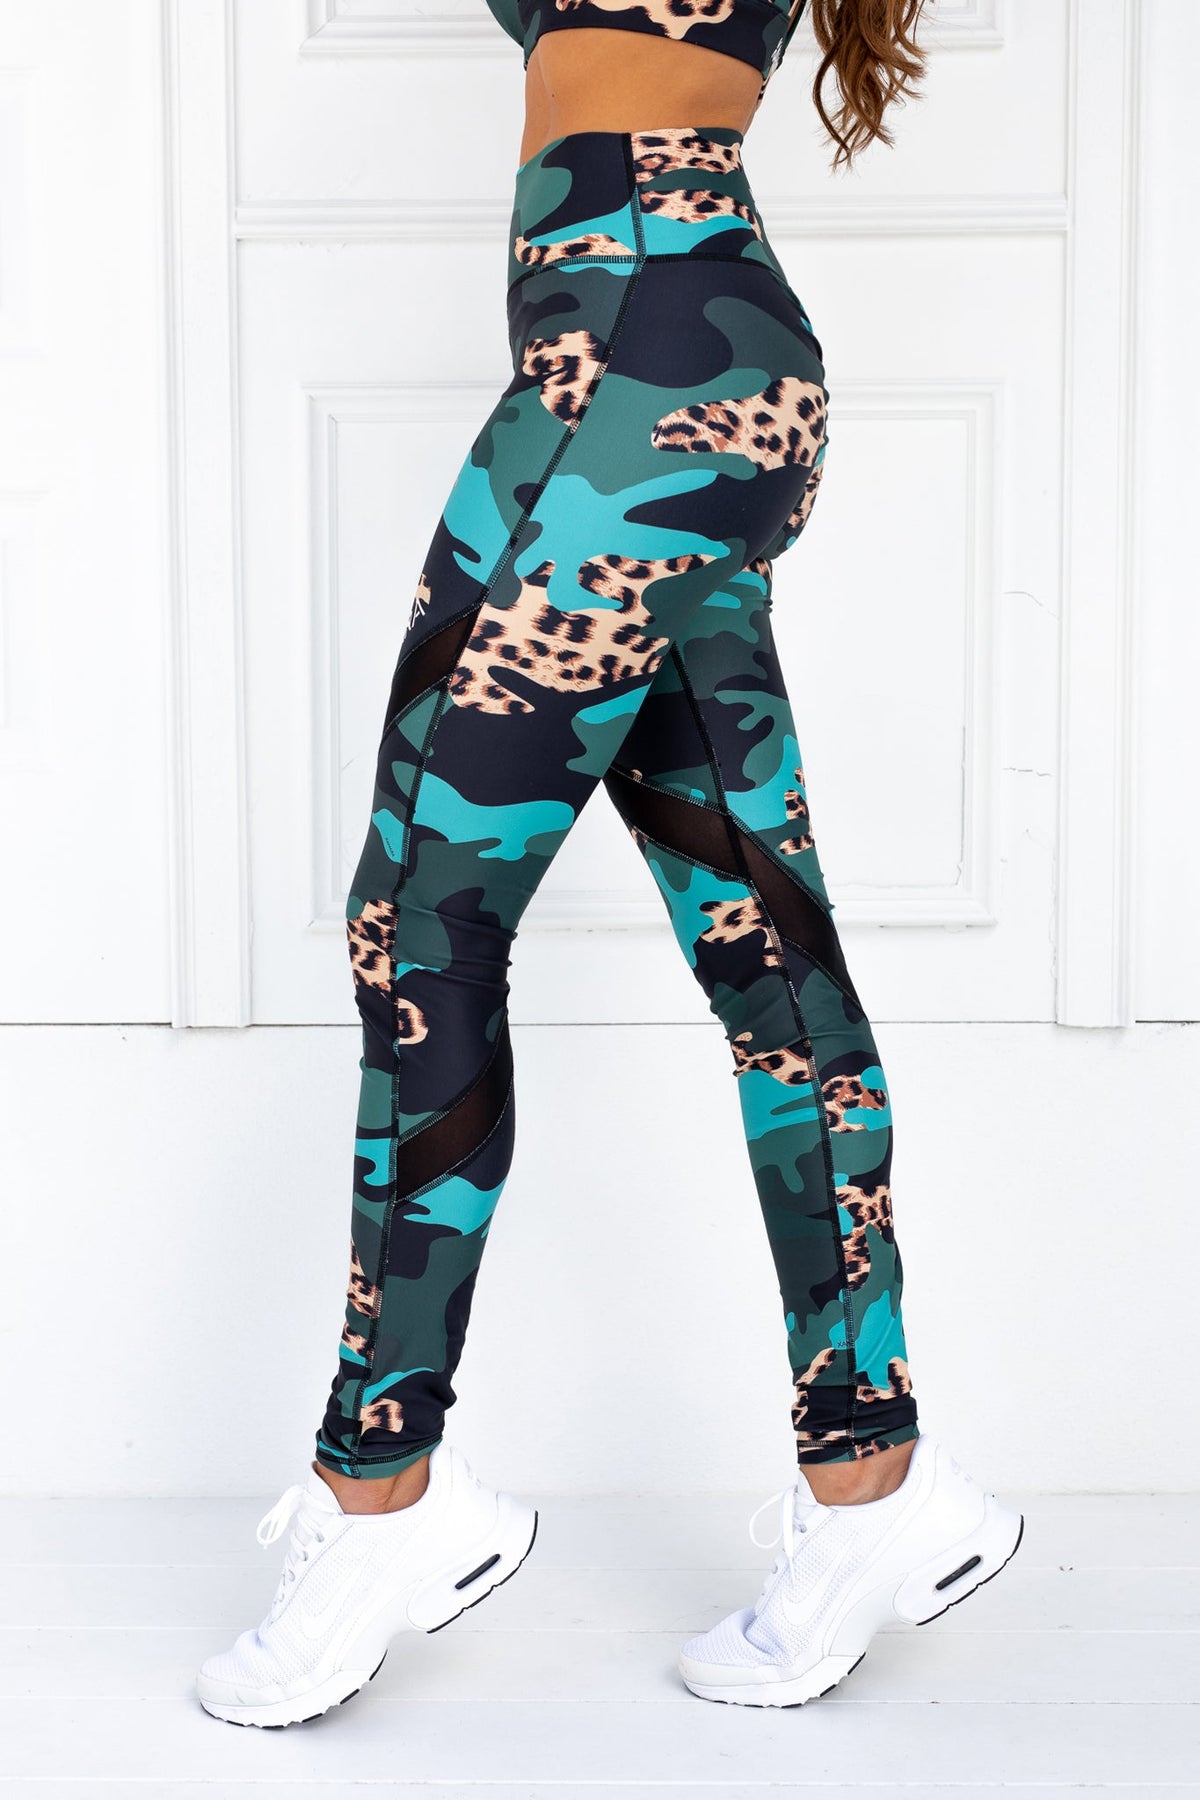 Bootylicious Khaki Leopard Camo Leggings - Xahara Activewear